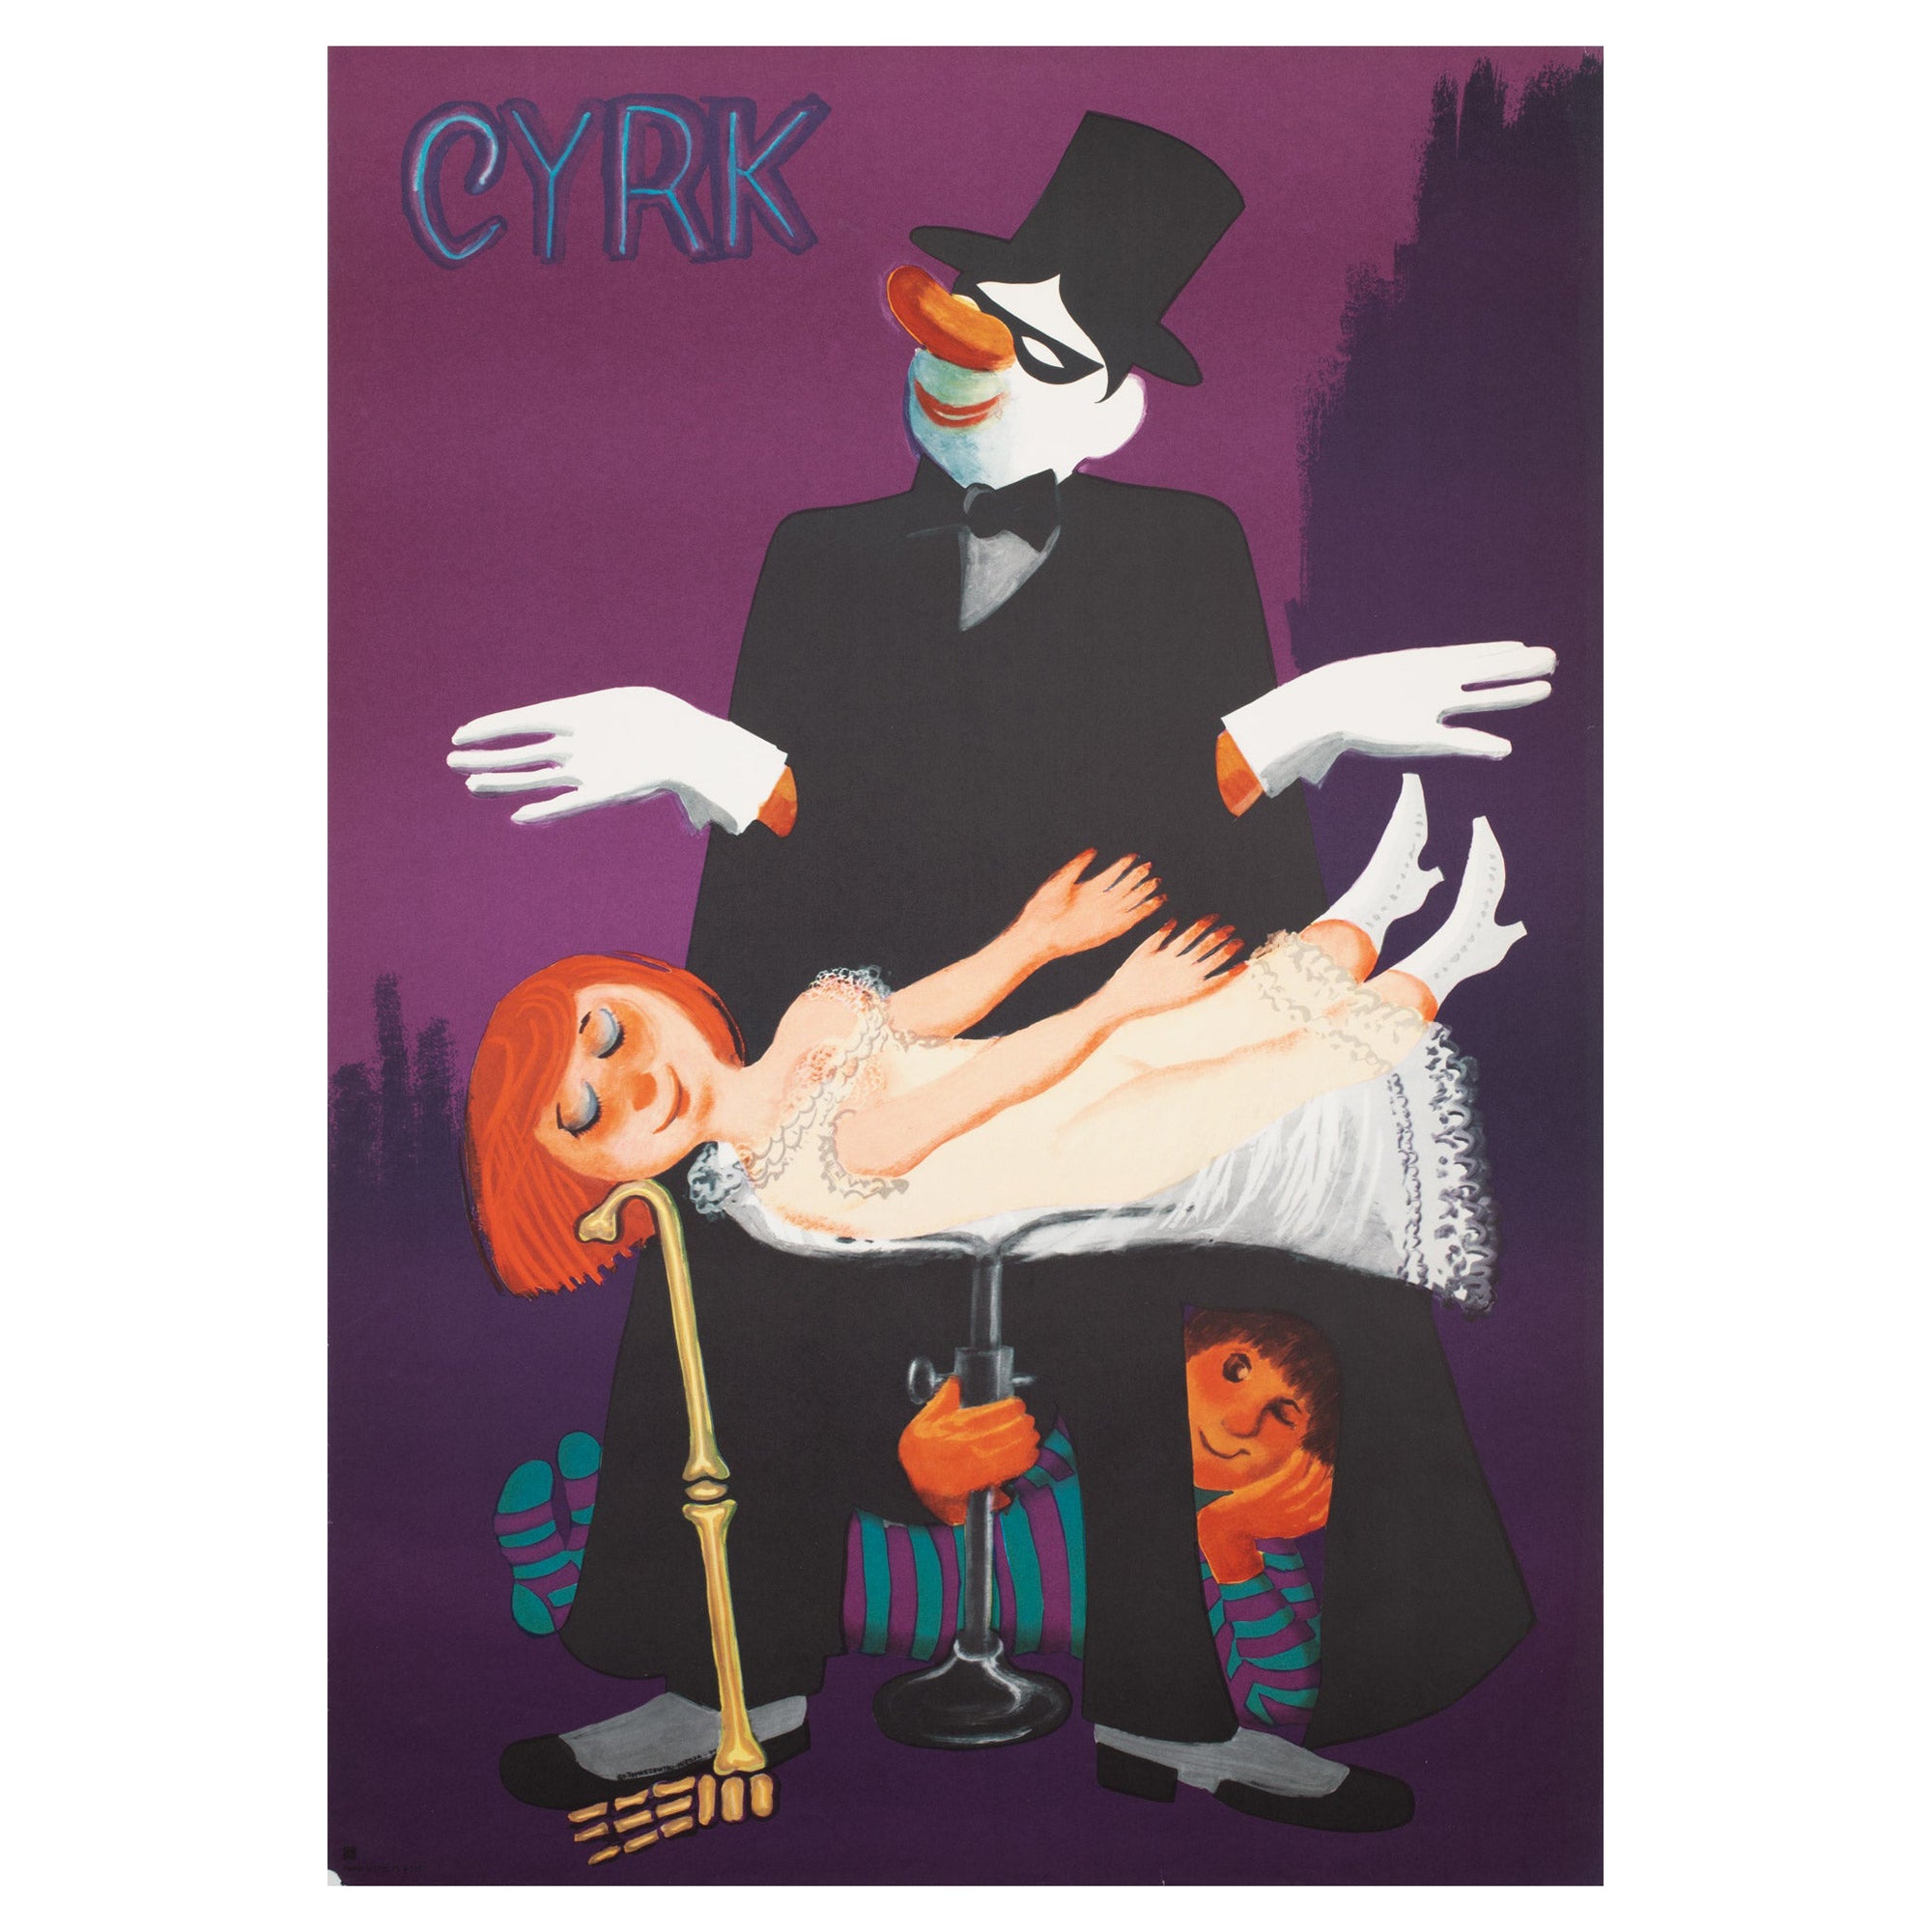 Affiche polonaise du cirque, Cyrk Magician Levitatation, Miedza-Tomaszewski, 1975